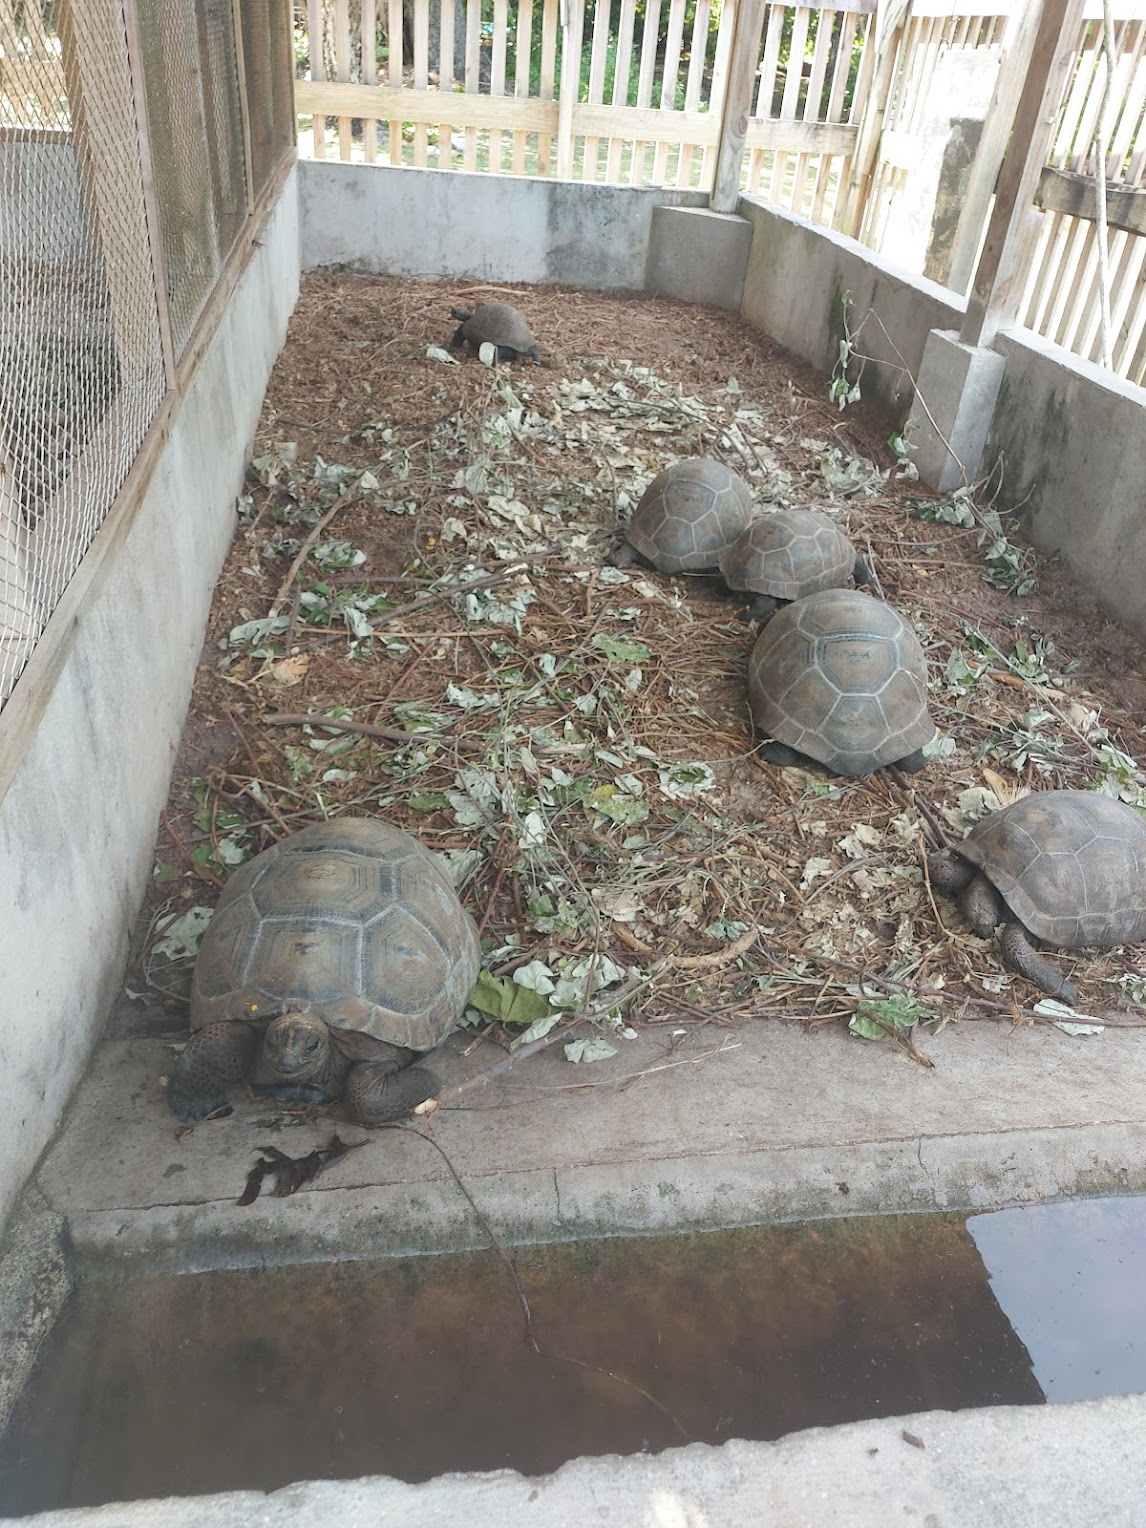 juvenile tortoises in an enclosure